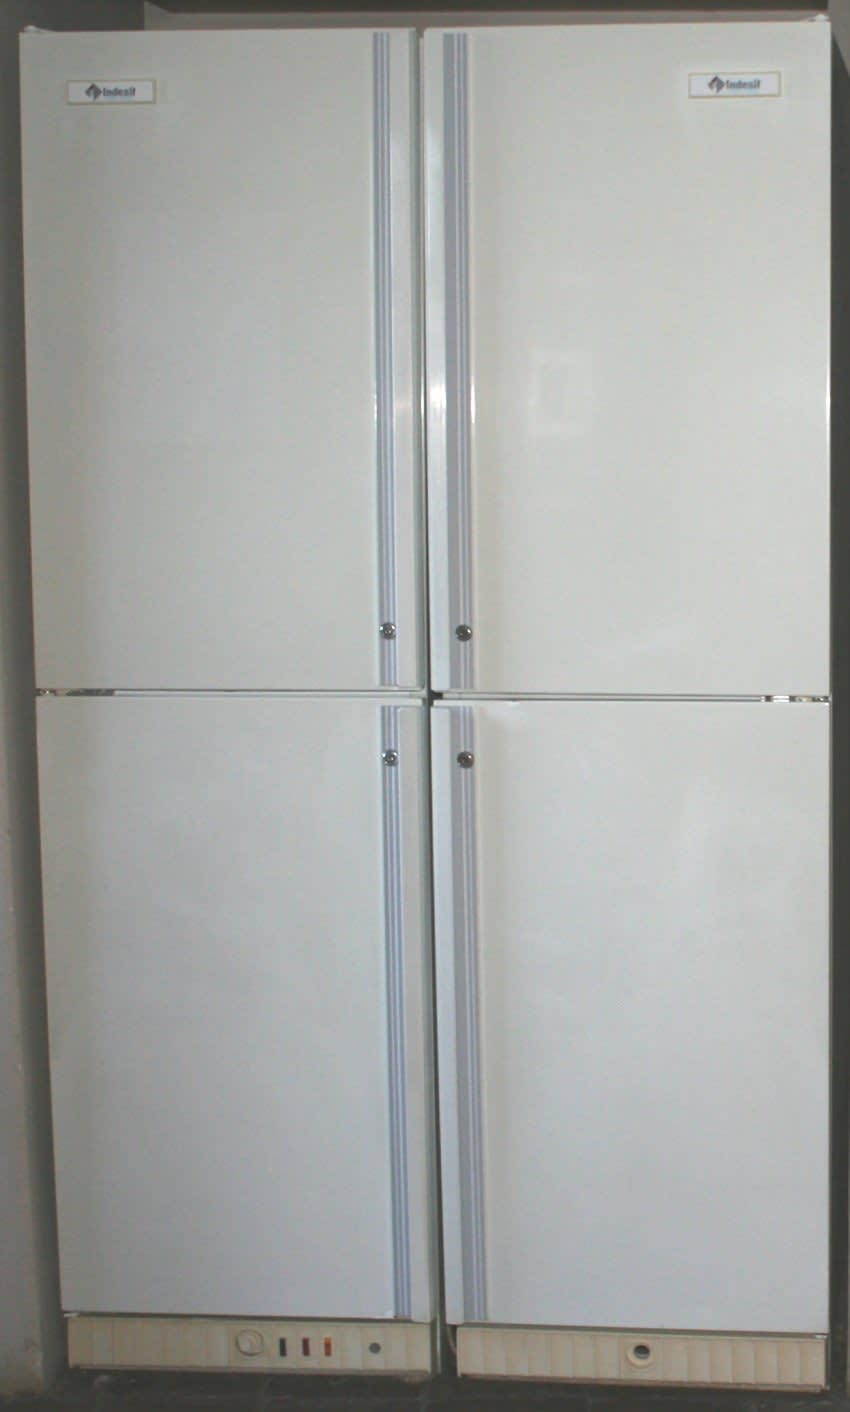 Fridges & Freezers - Indesit series 2000 double fridge & freezer, 2 ...